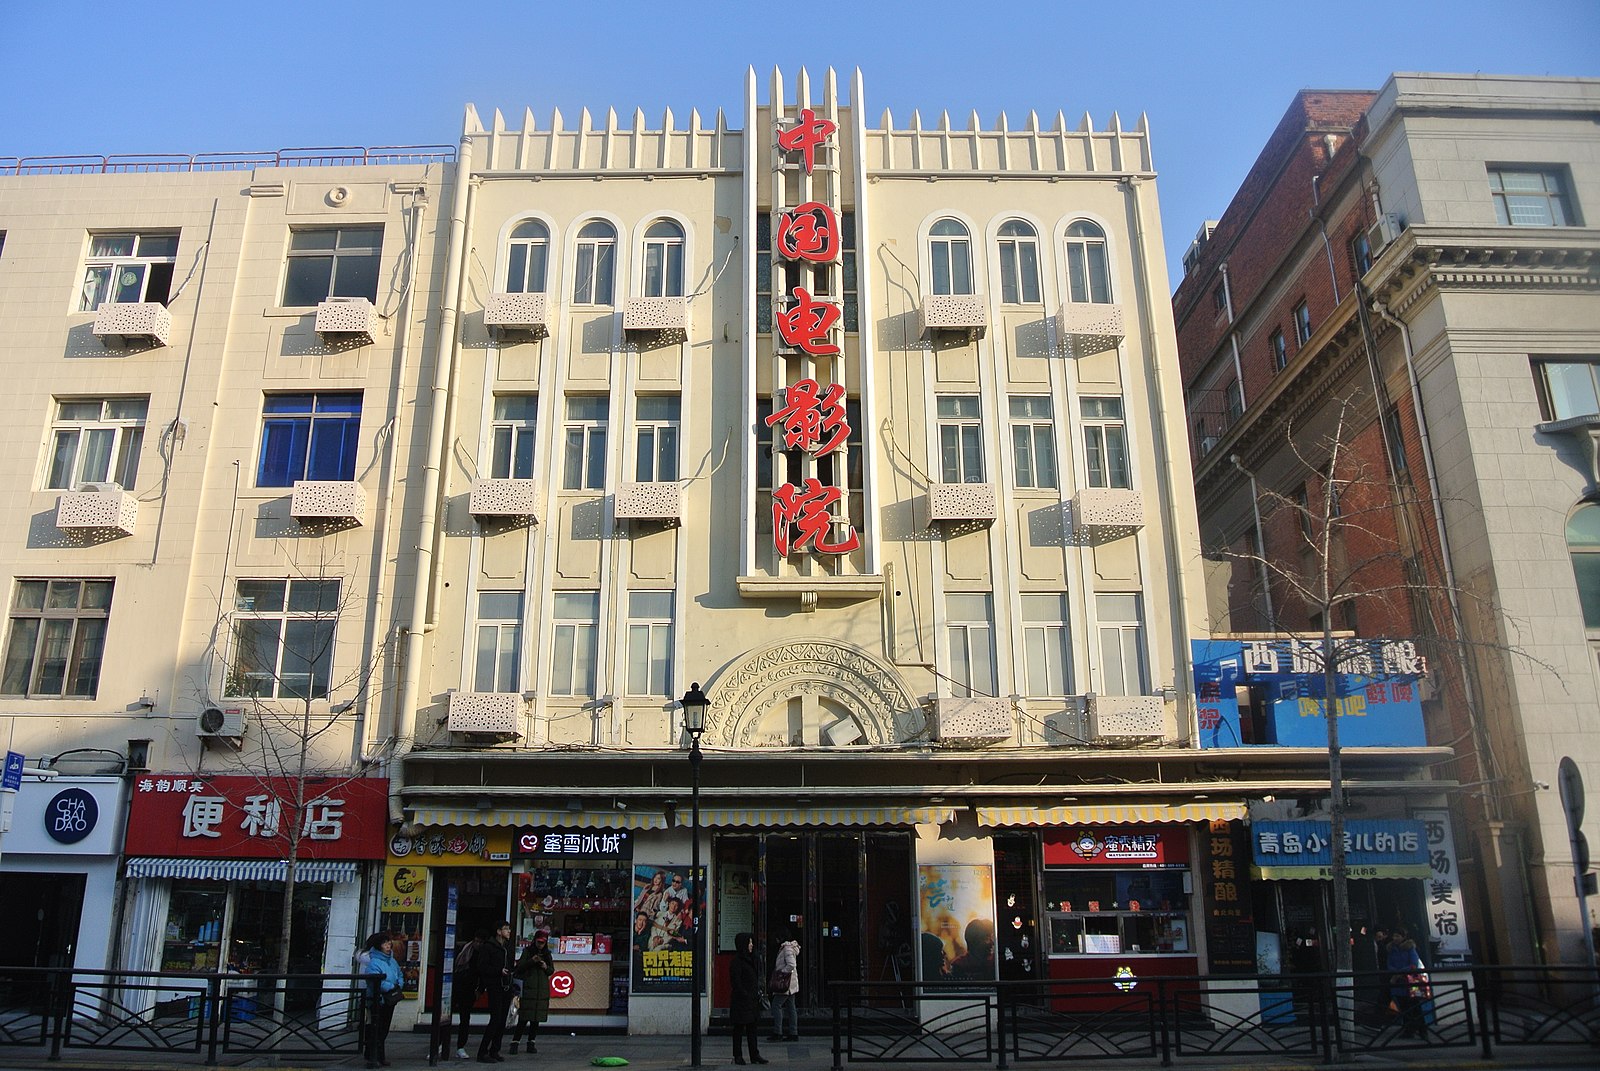 The main entrance of Qingdao China Cinema